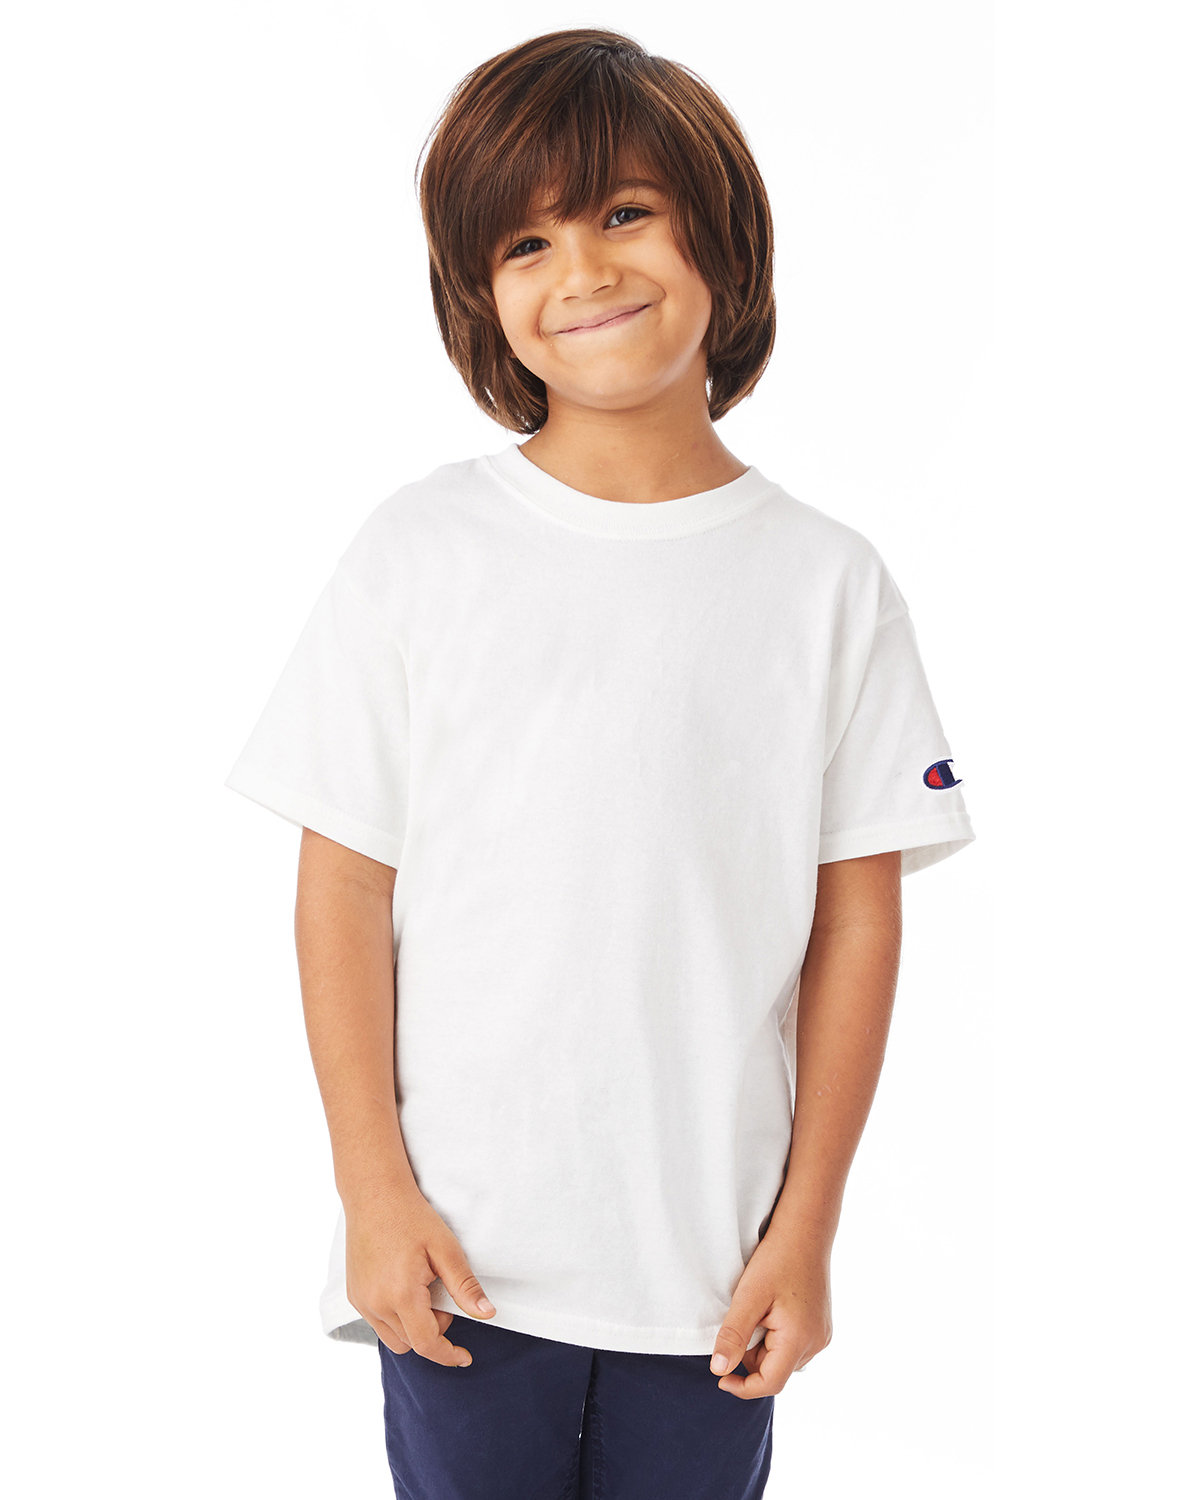 Youth Short-Sleeve T-Shirt-